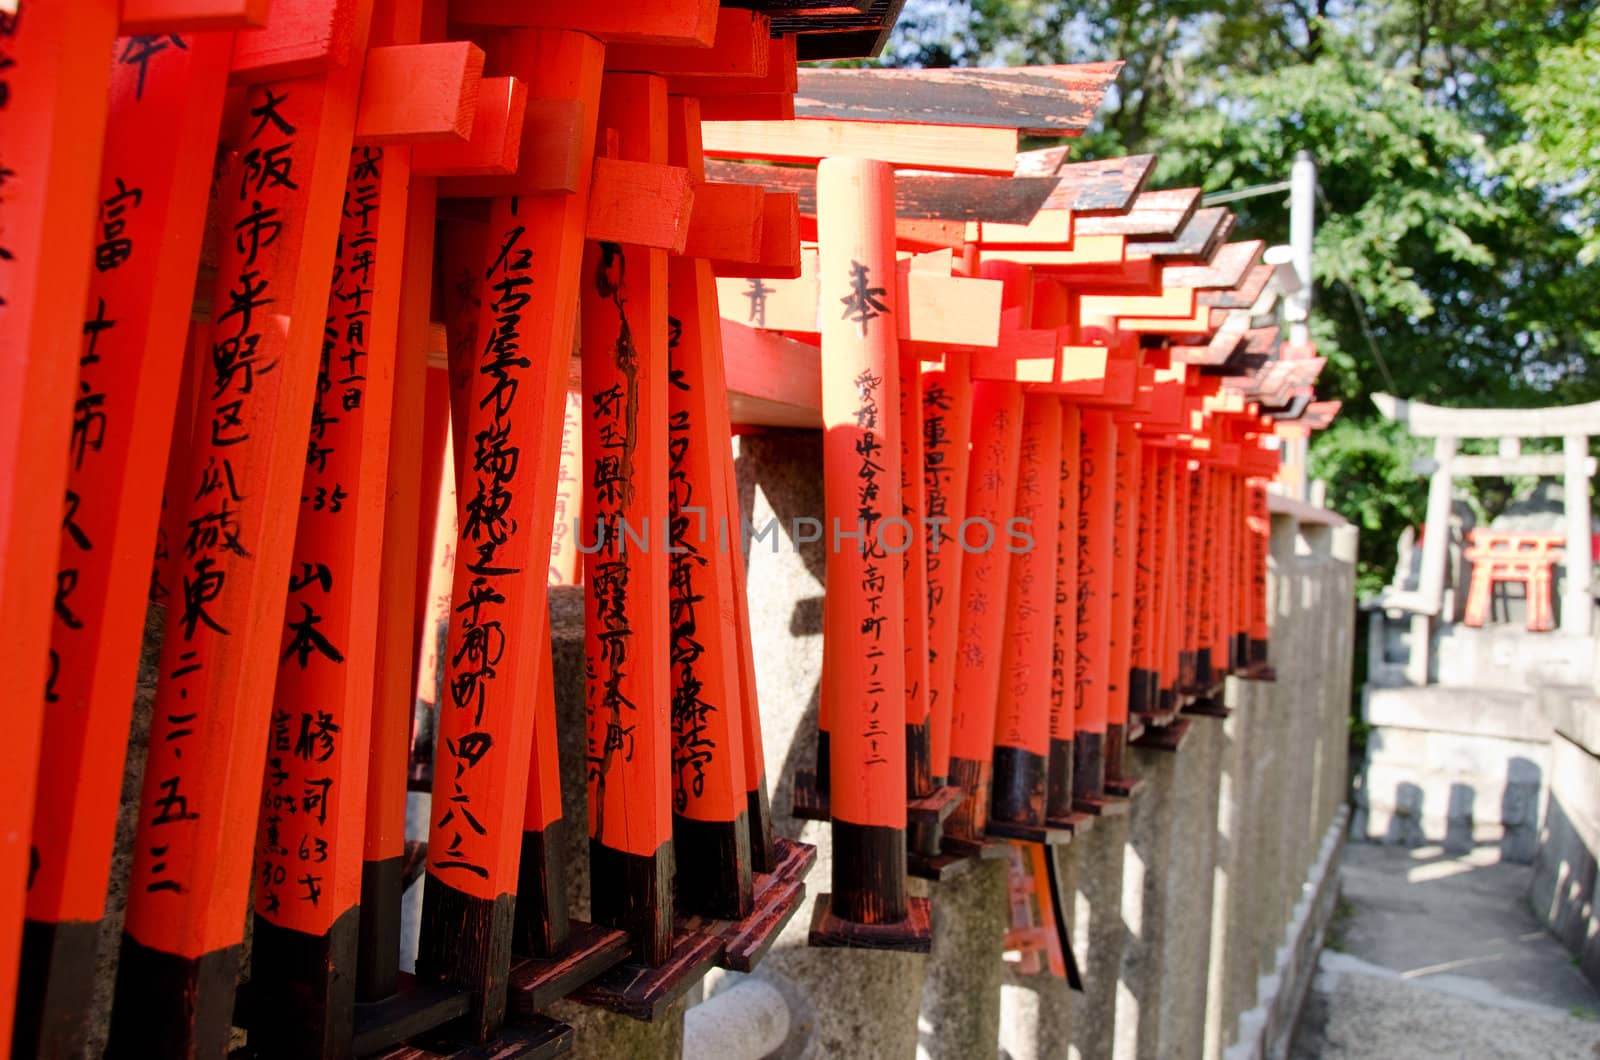 Small torii gates at the fushimi inari shrine in kyoto